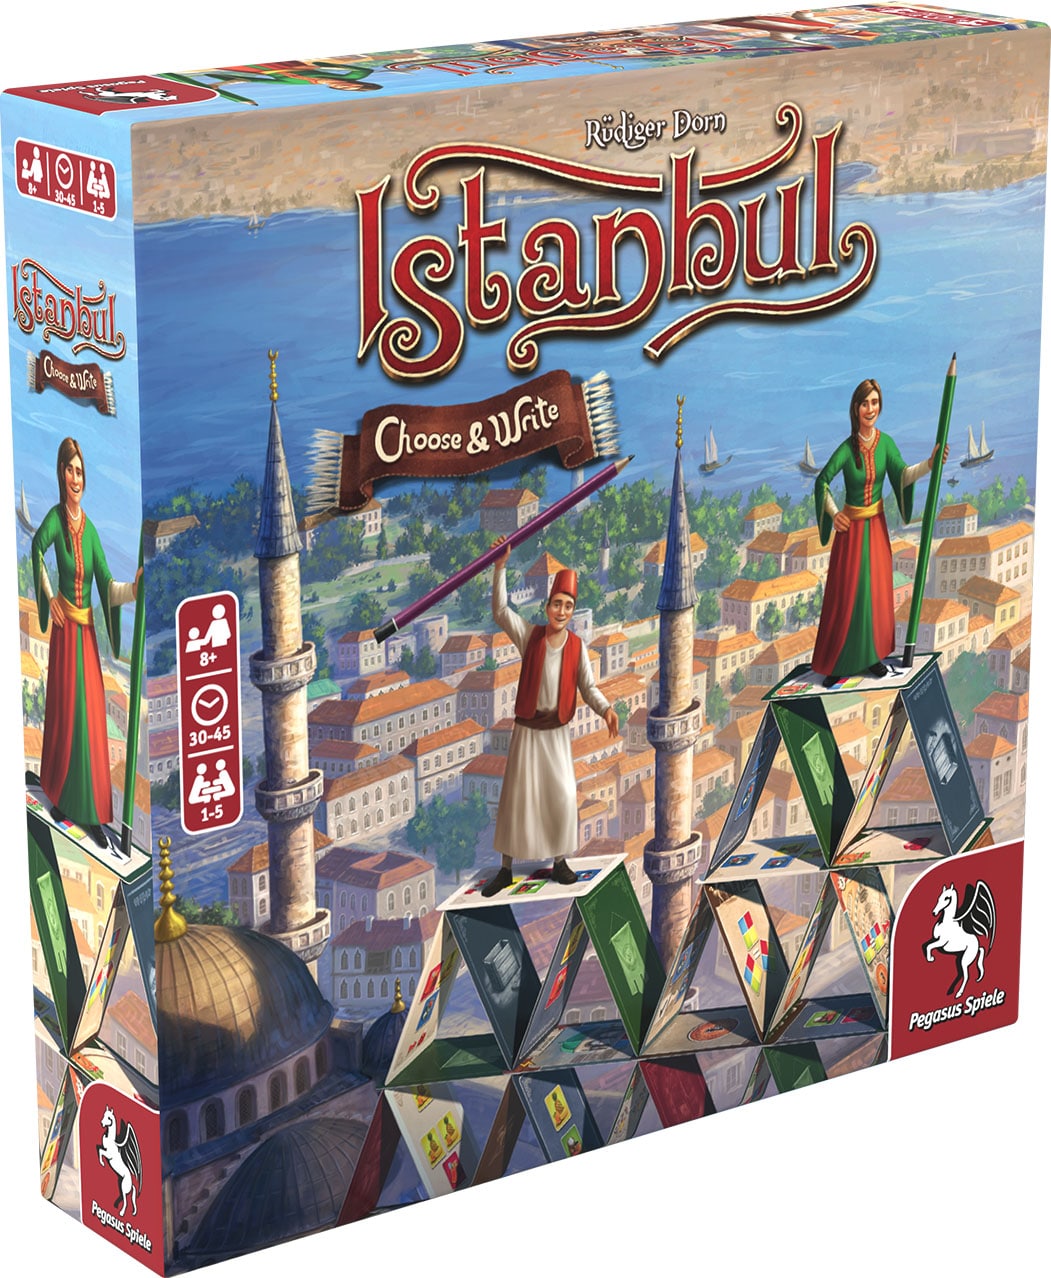 Стамбул: Вибери та запиши (Istanbul: Choose & Write) (EN) Pehasus Spiele - Настільна гра